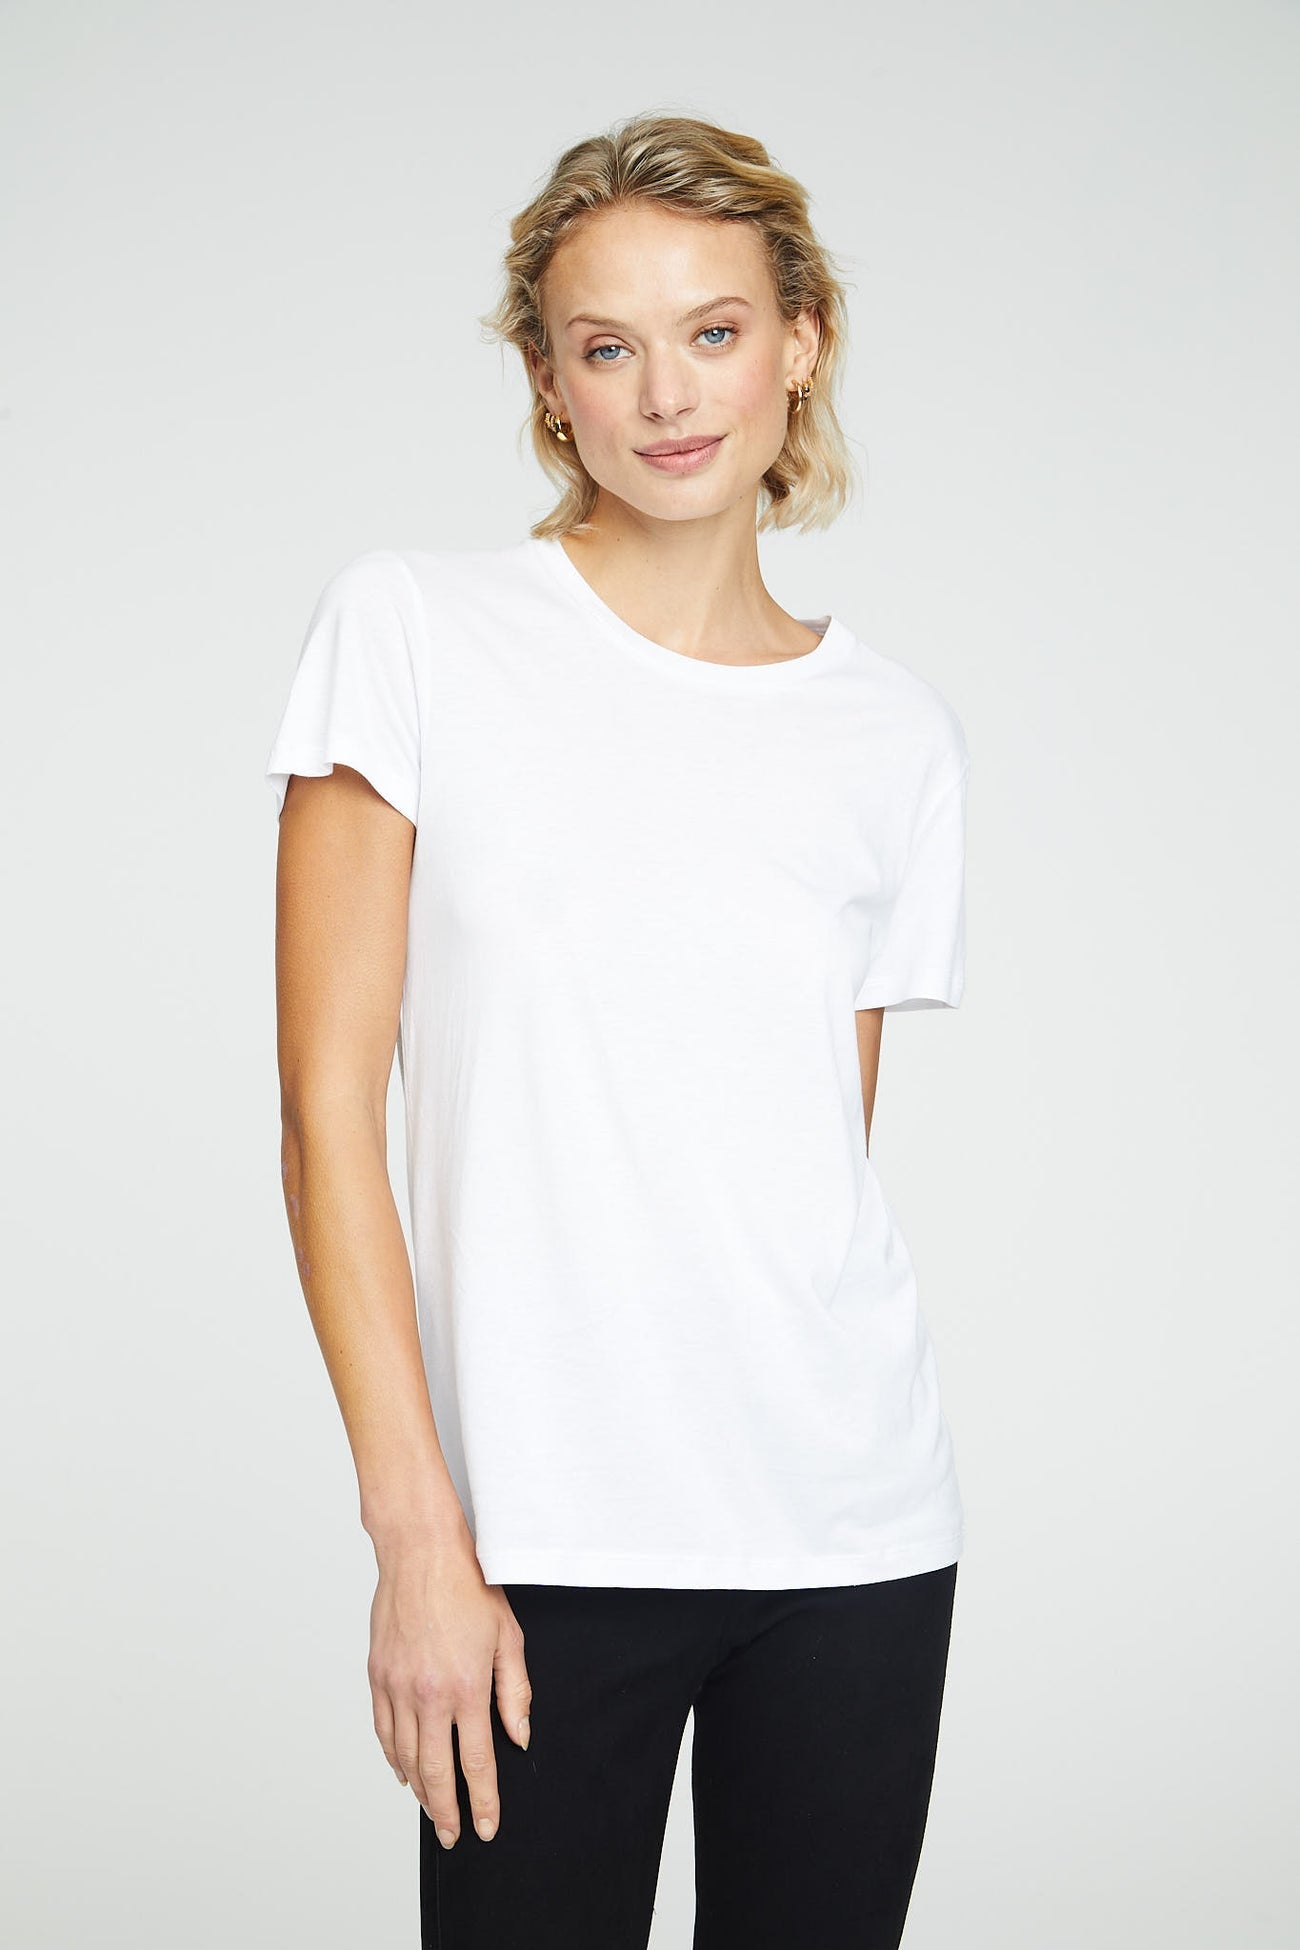 Unisex T-Shirt White